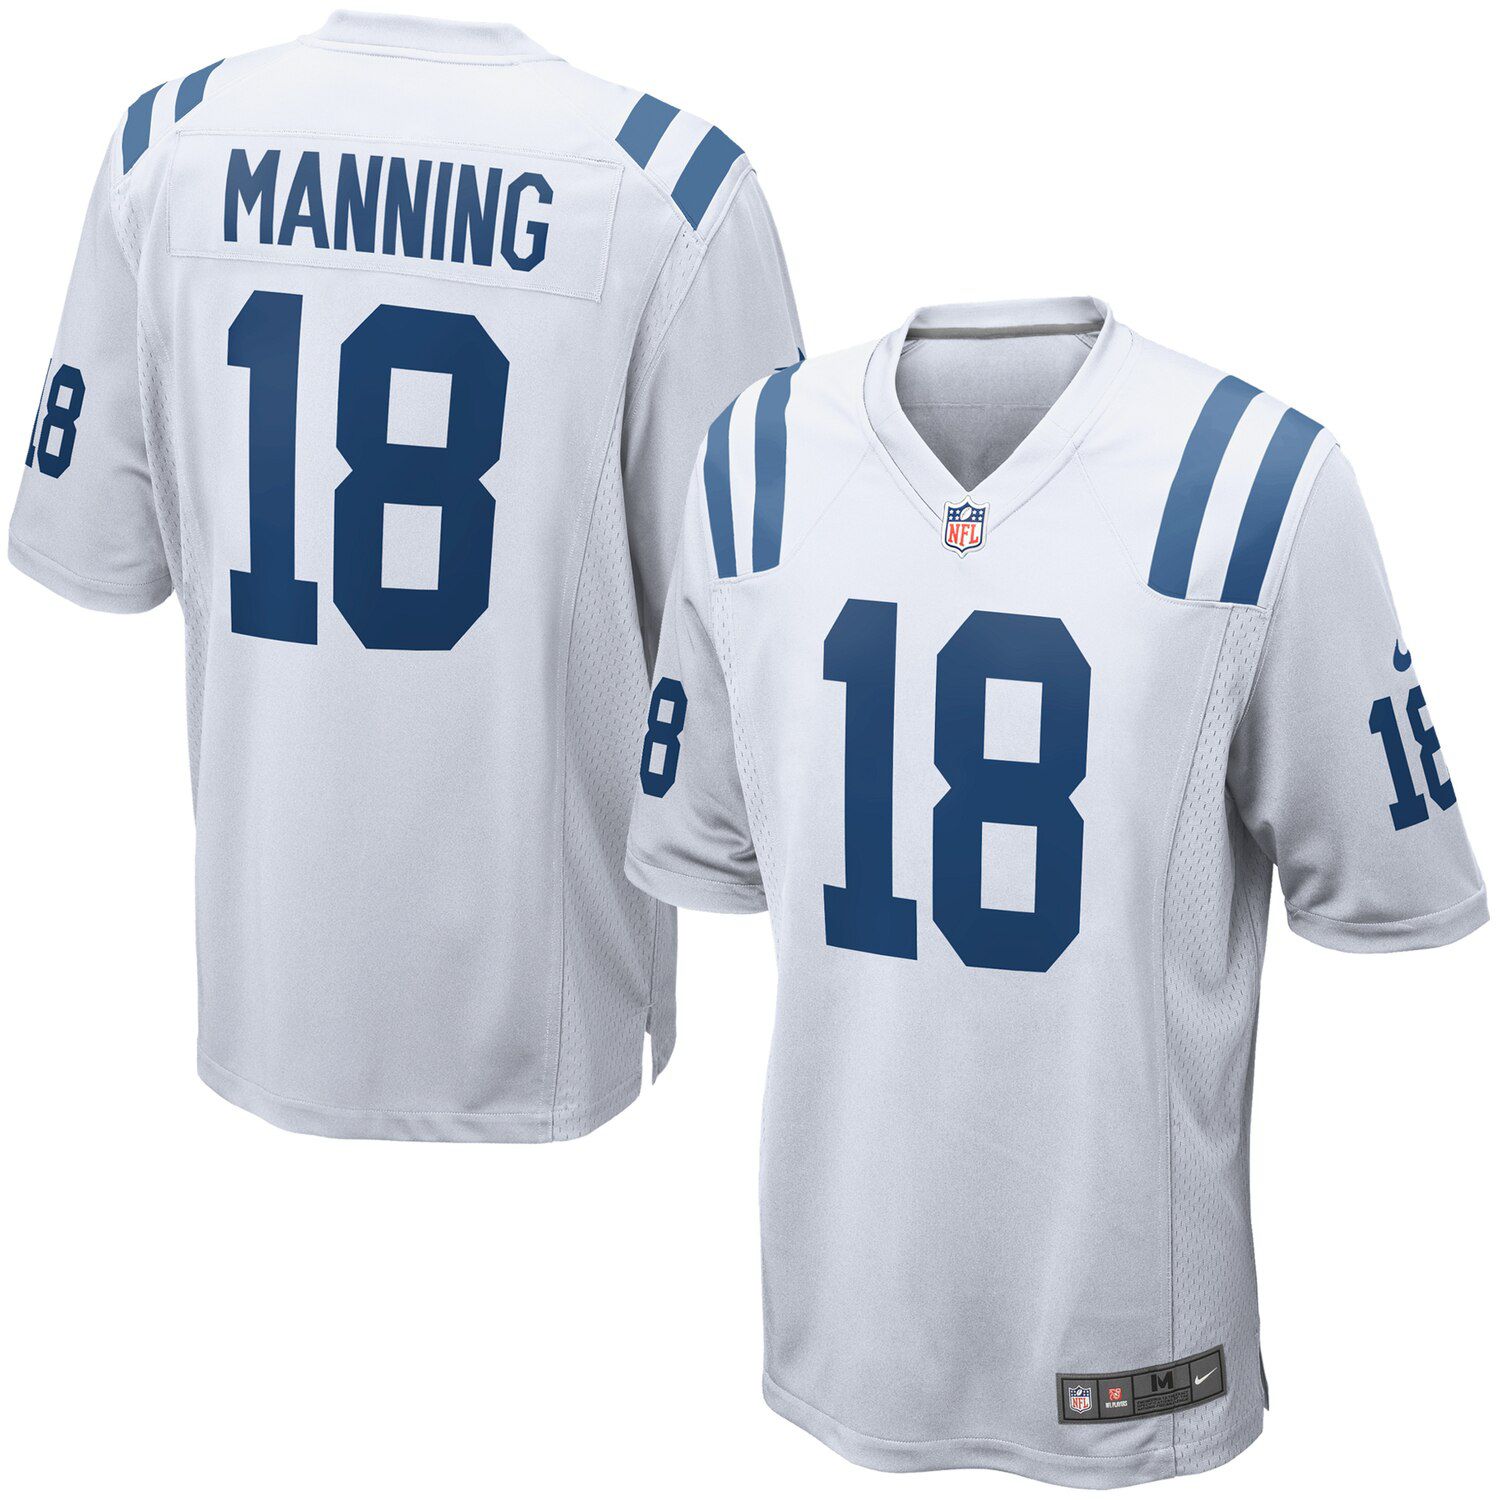 Peyton Manning White Indianapolis Colts 